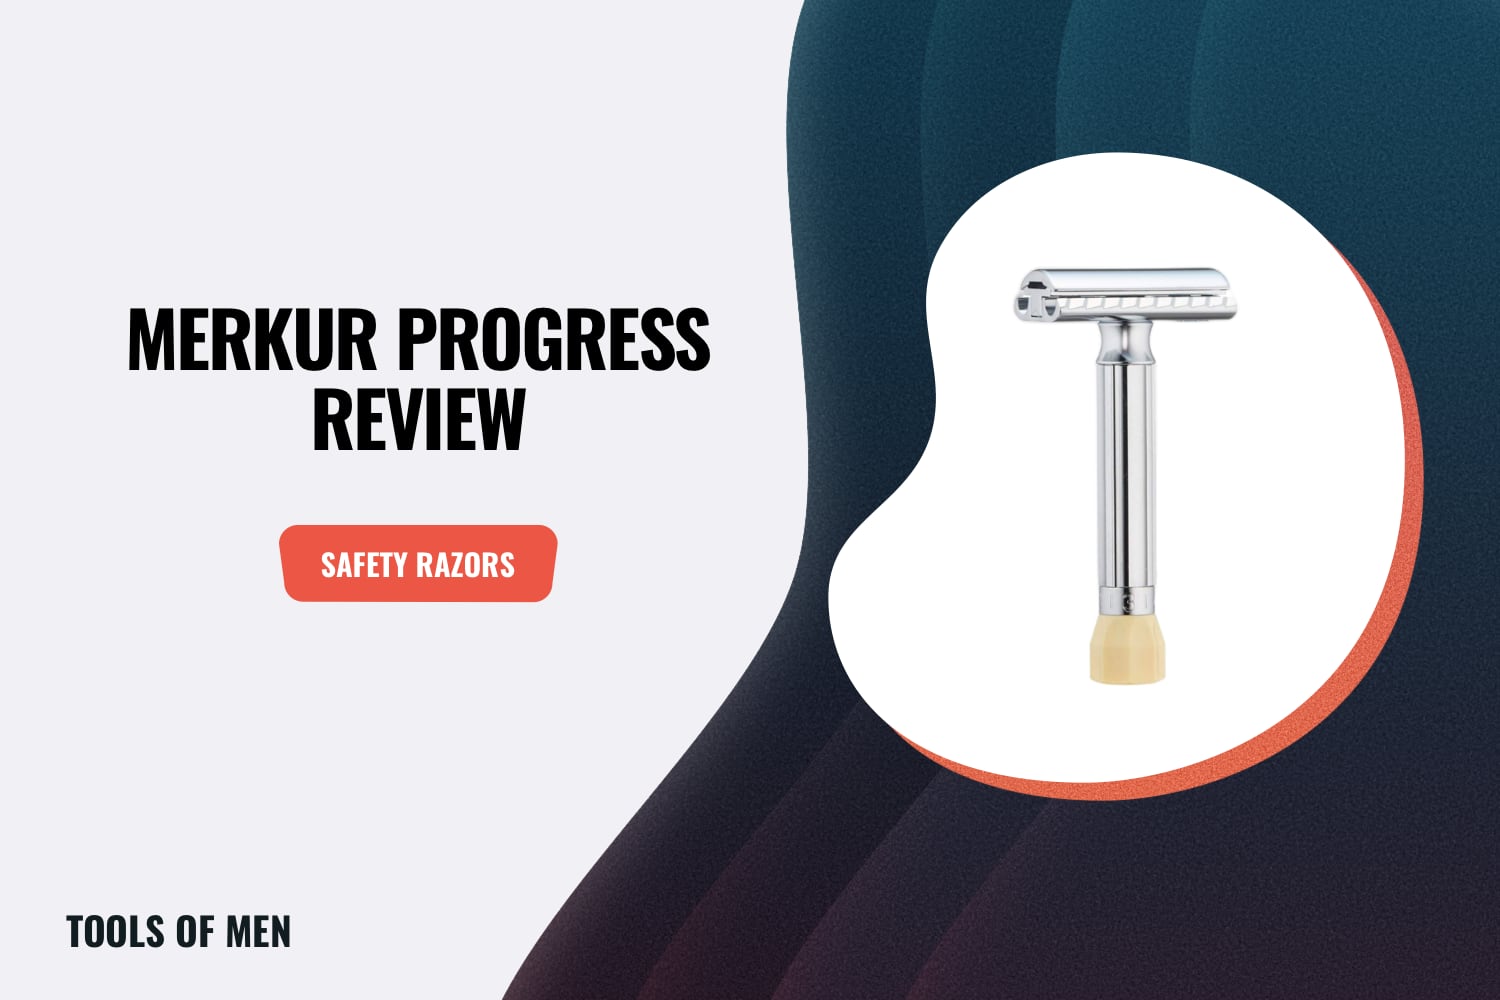 Merkur Progress Review feature image